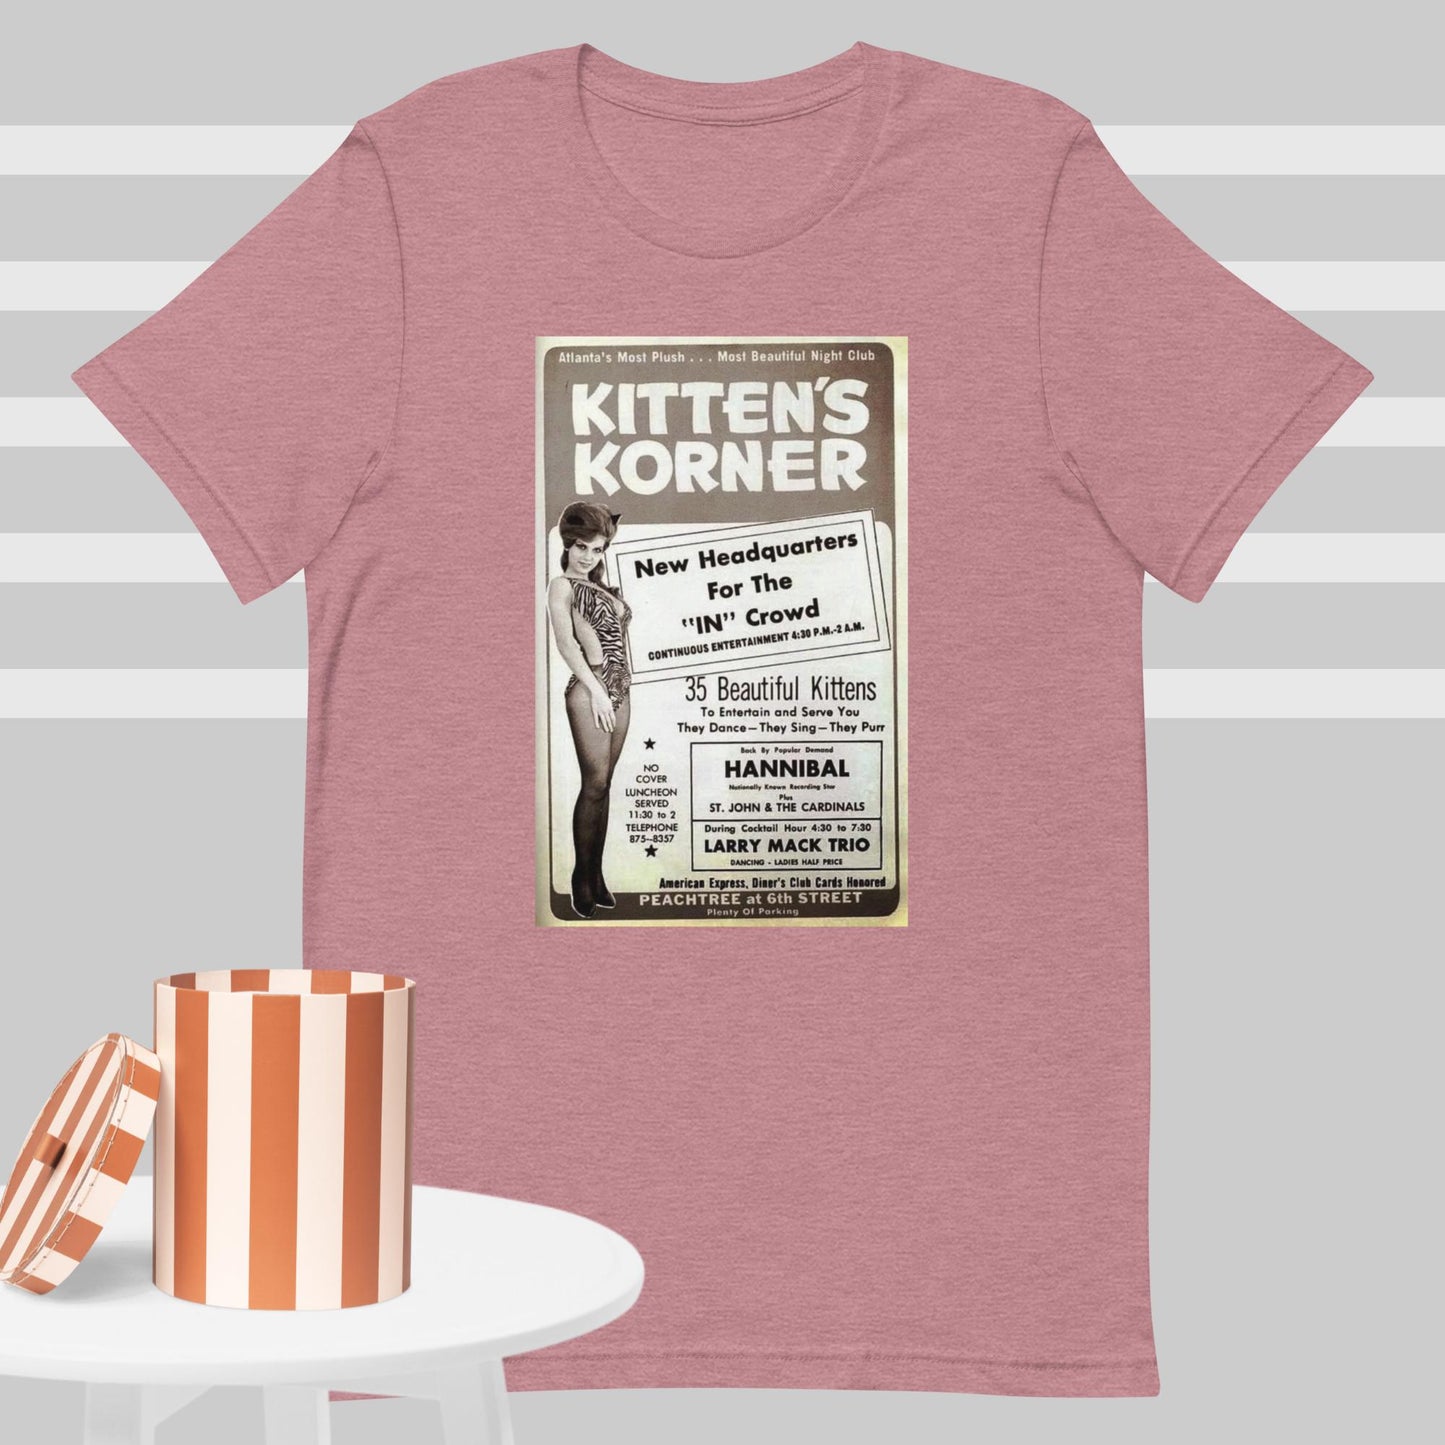 "Kitten's Korner...Atlanta's Most Plush Nightclub"